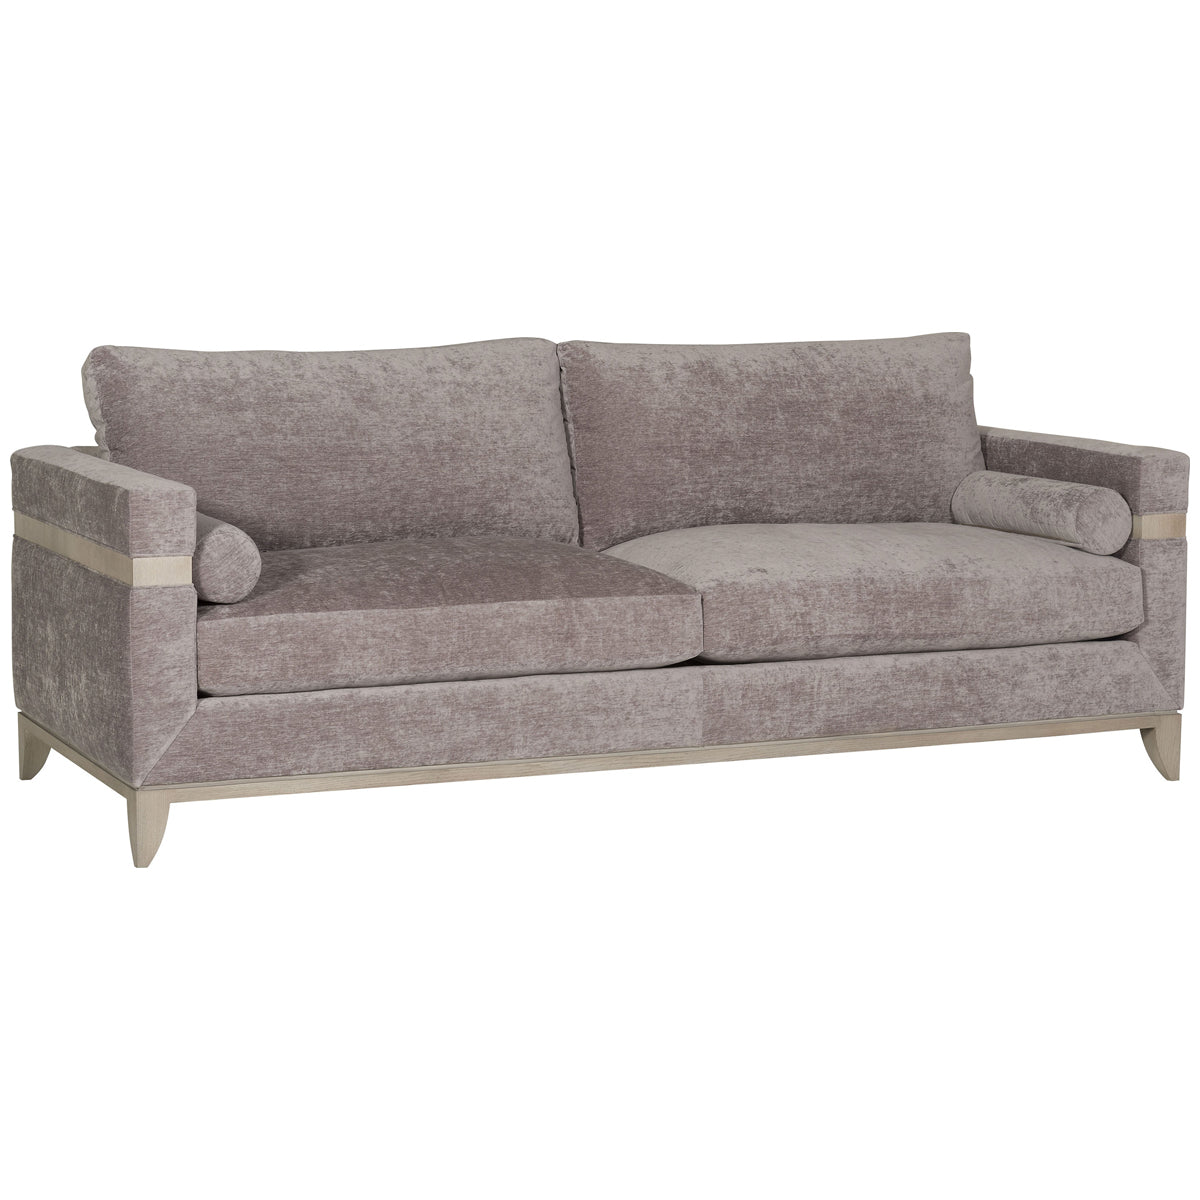 Vanguard Furniture Cove 2-Seat Sofa